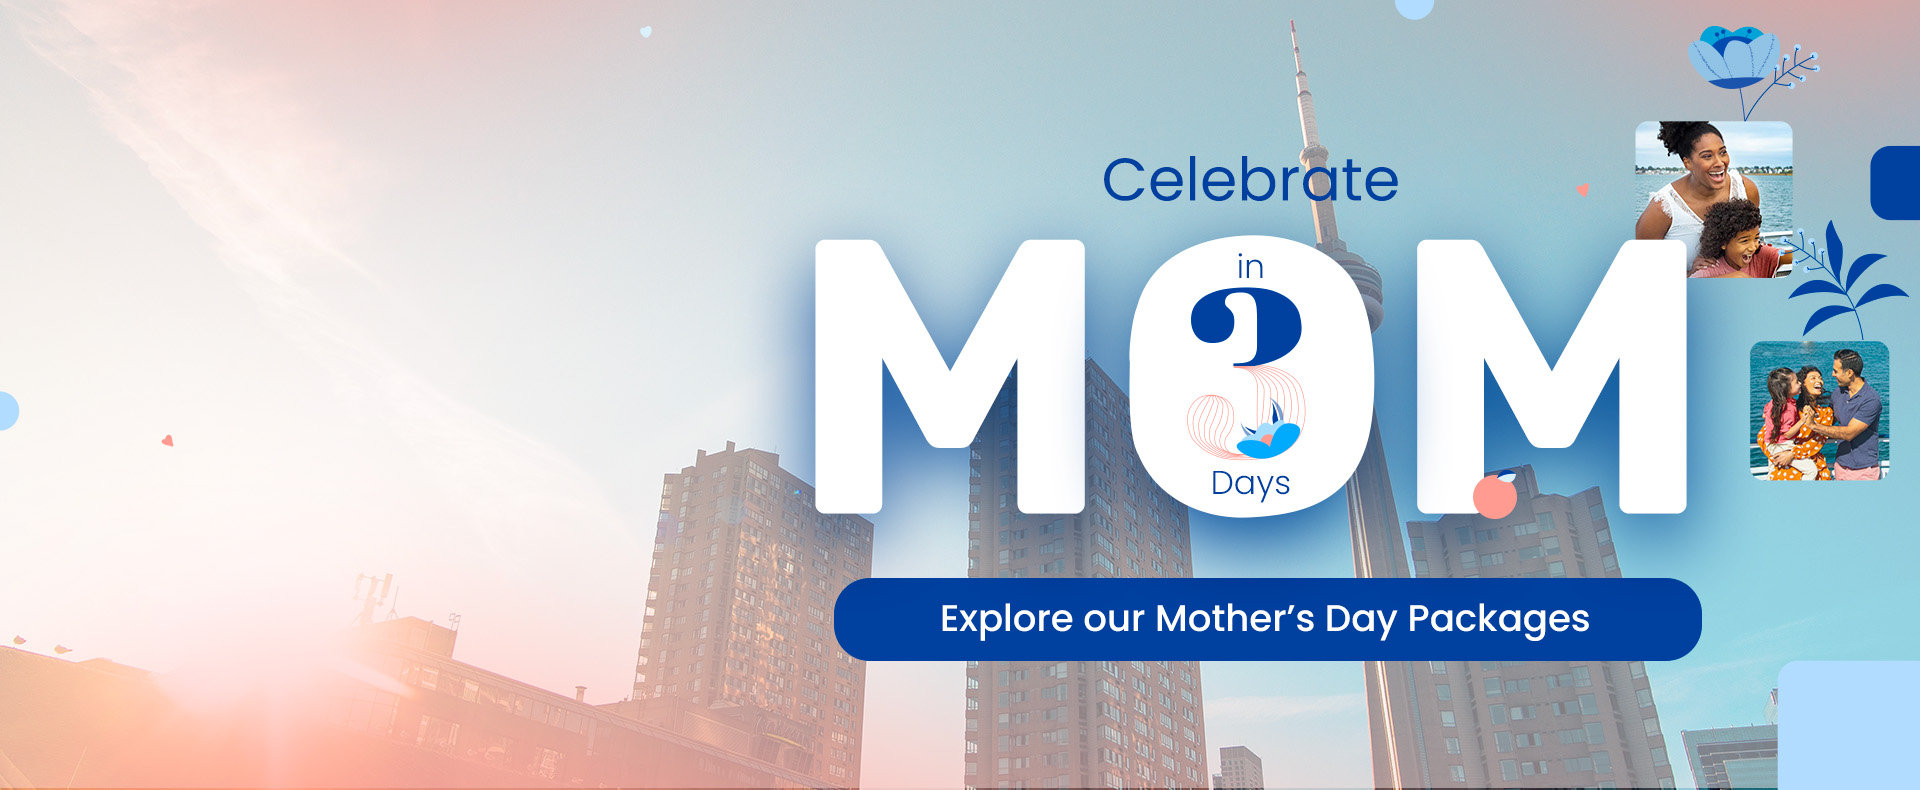 Toronto Mother’s Day countdown 3 days away